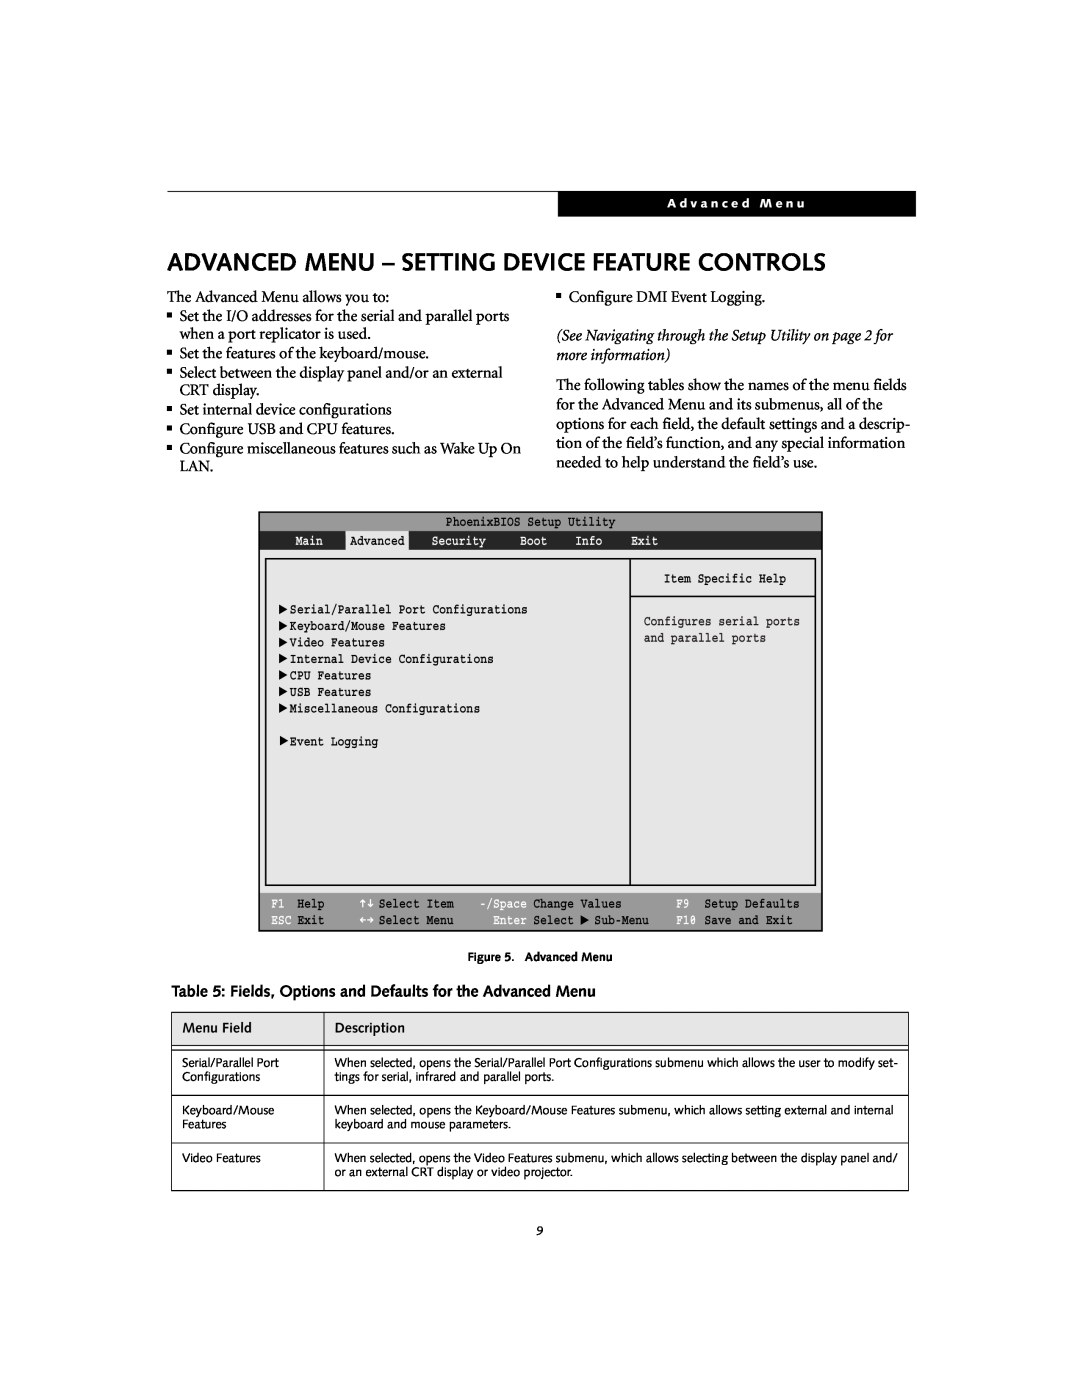 Fujitsu Siemens Computers S7110 manual Advanced Menu - Setting Device Feature Controls 